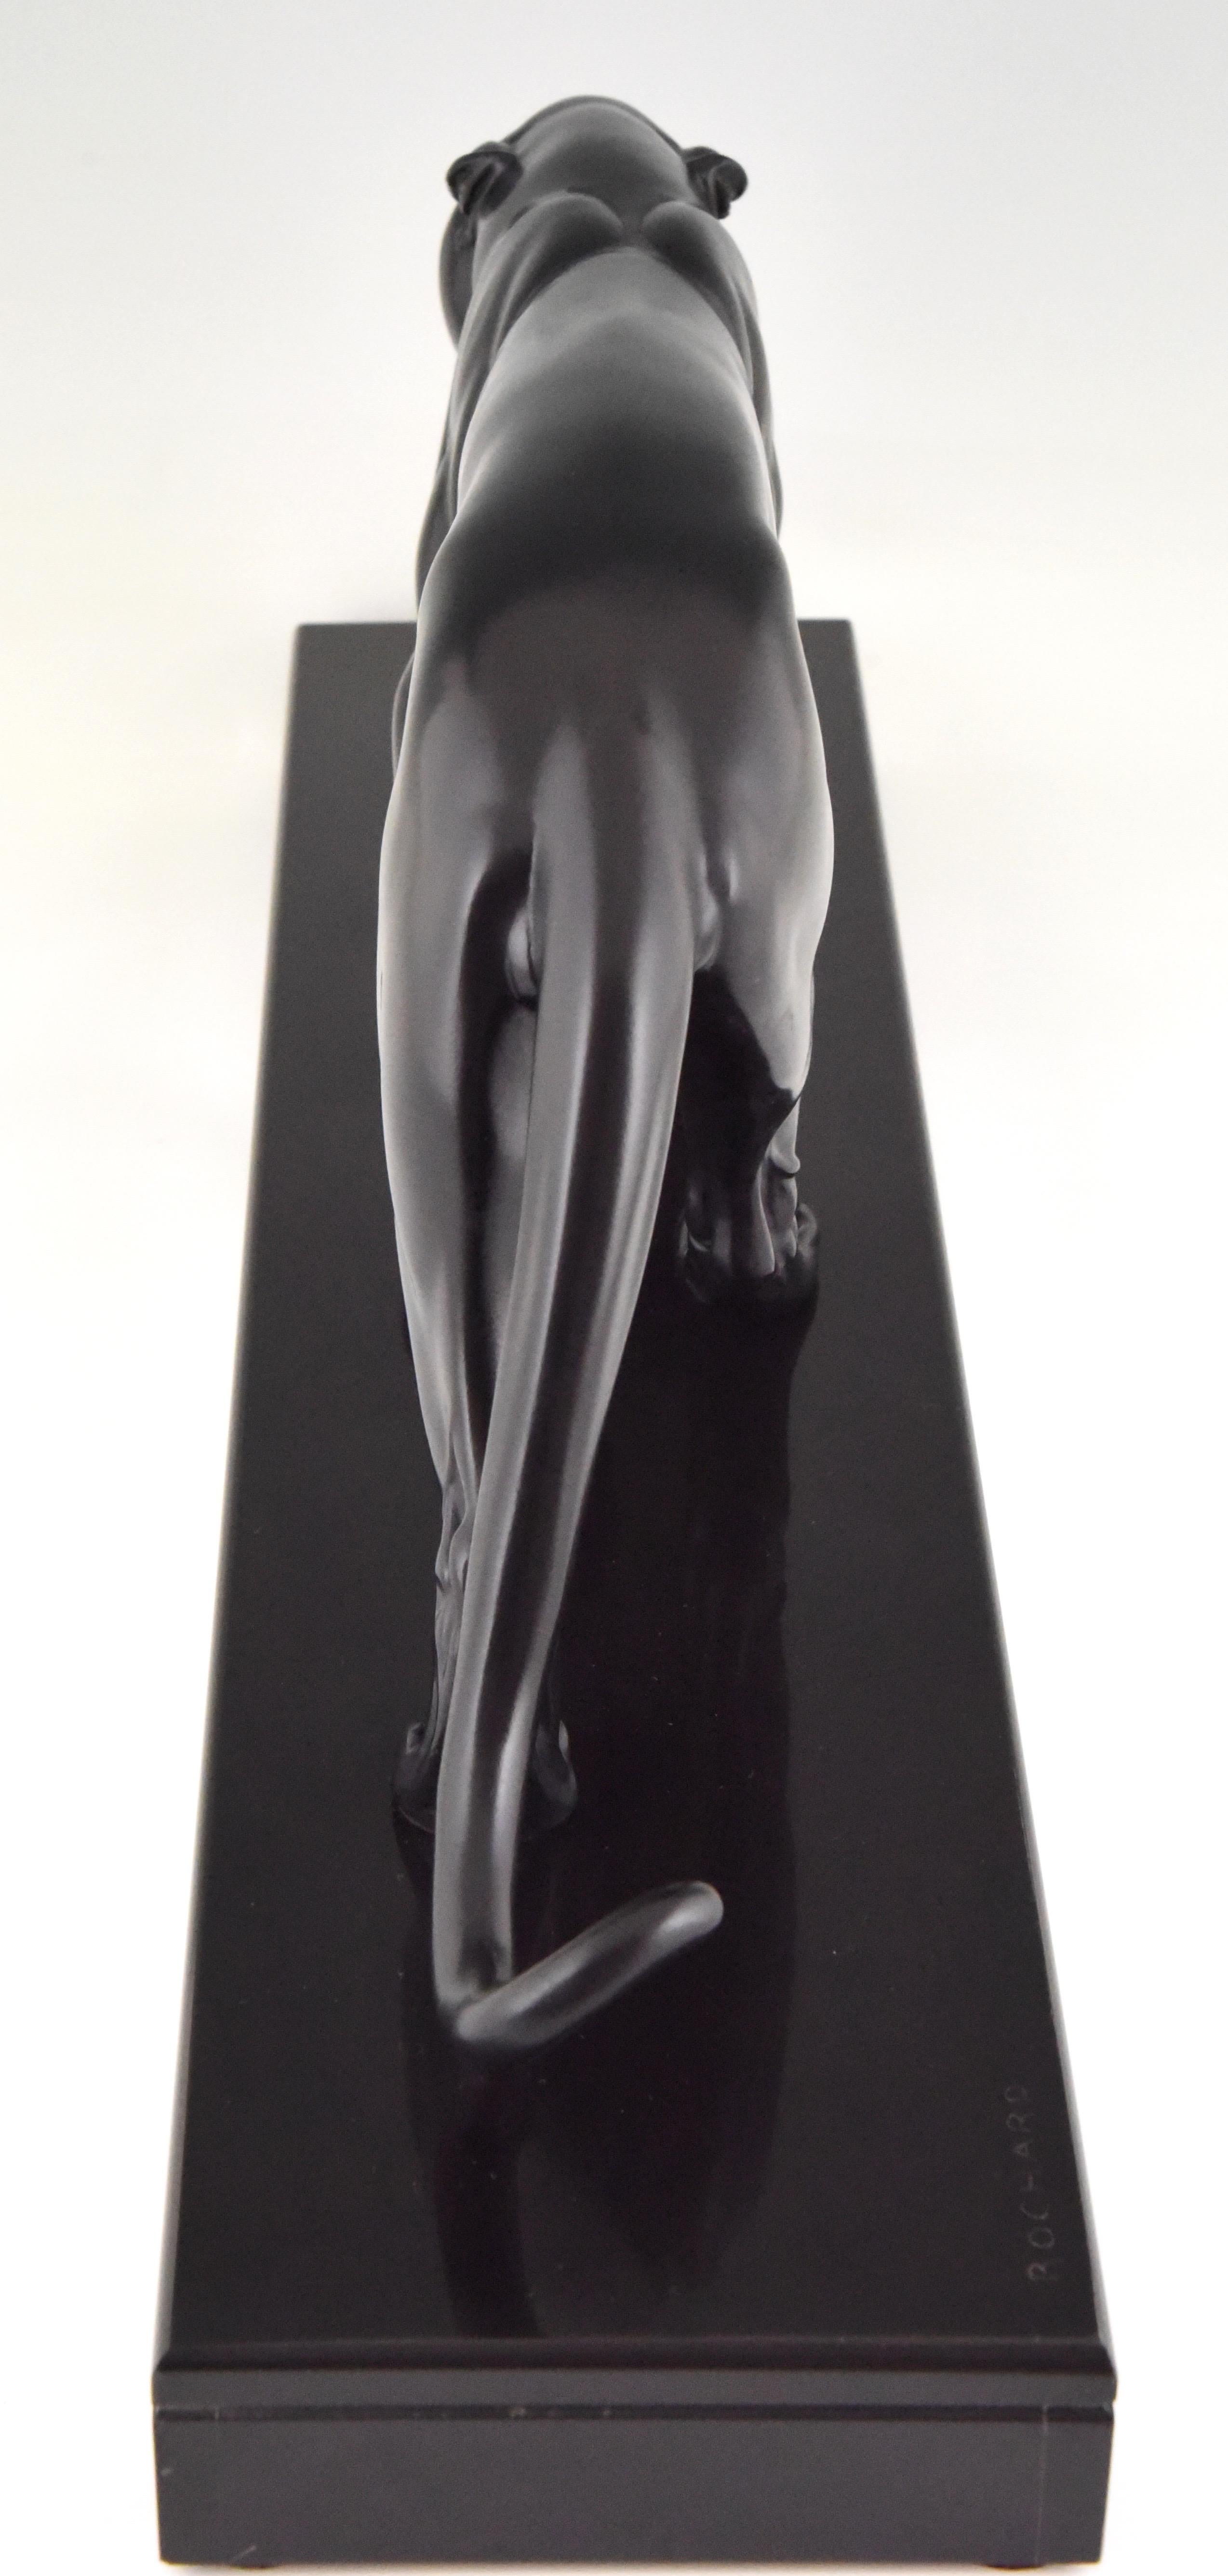 Irenee Rochard Art Deco Sculpture Black Panther France 1930 1